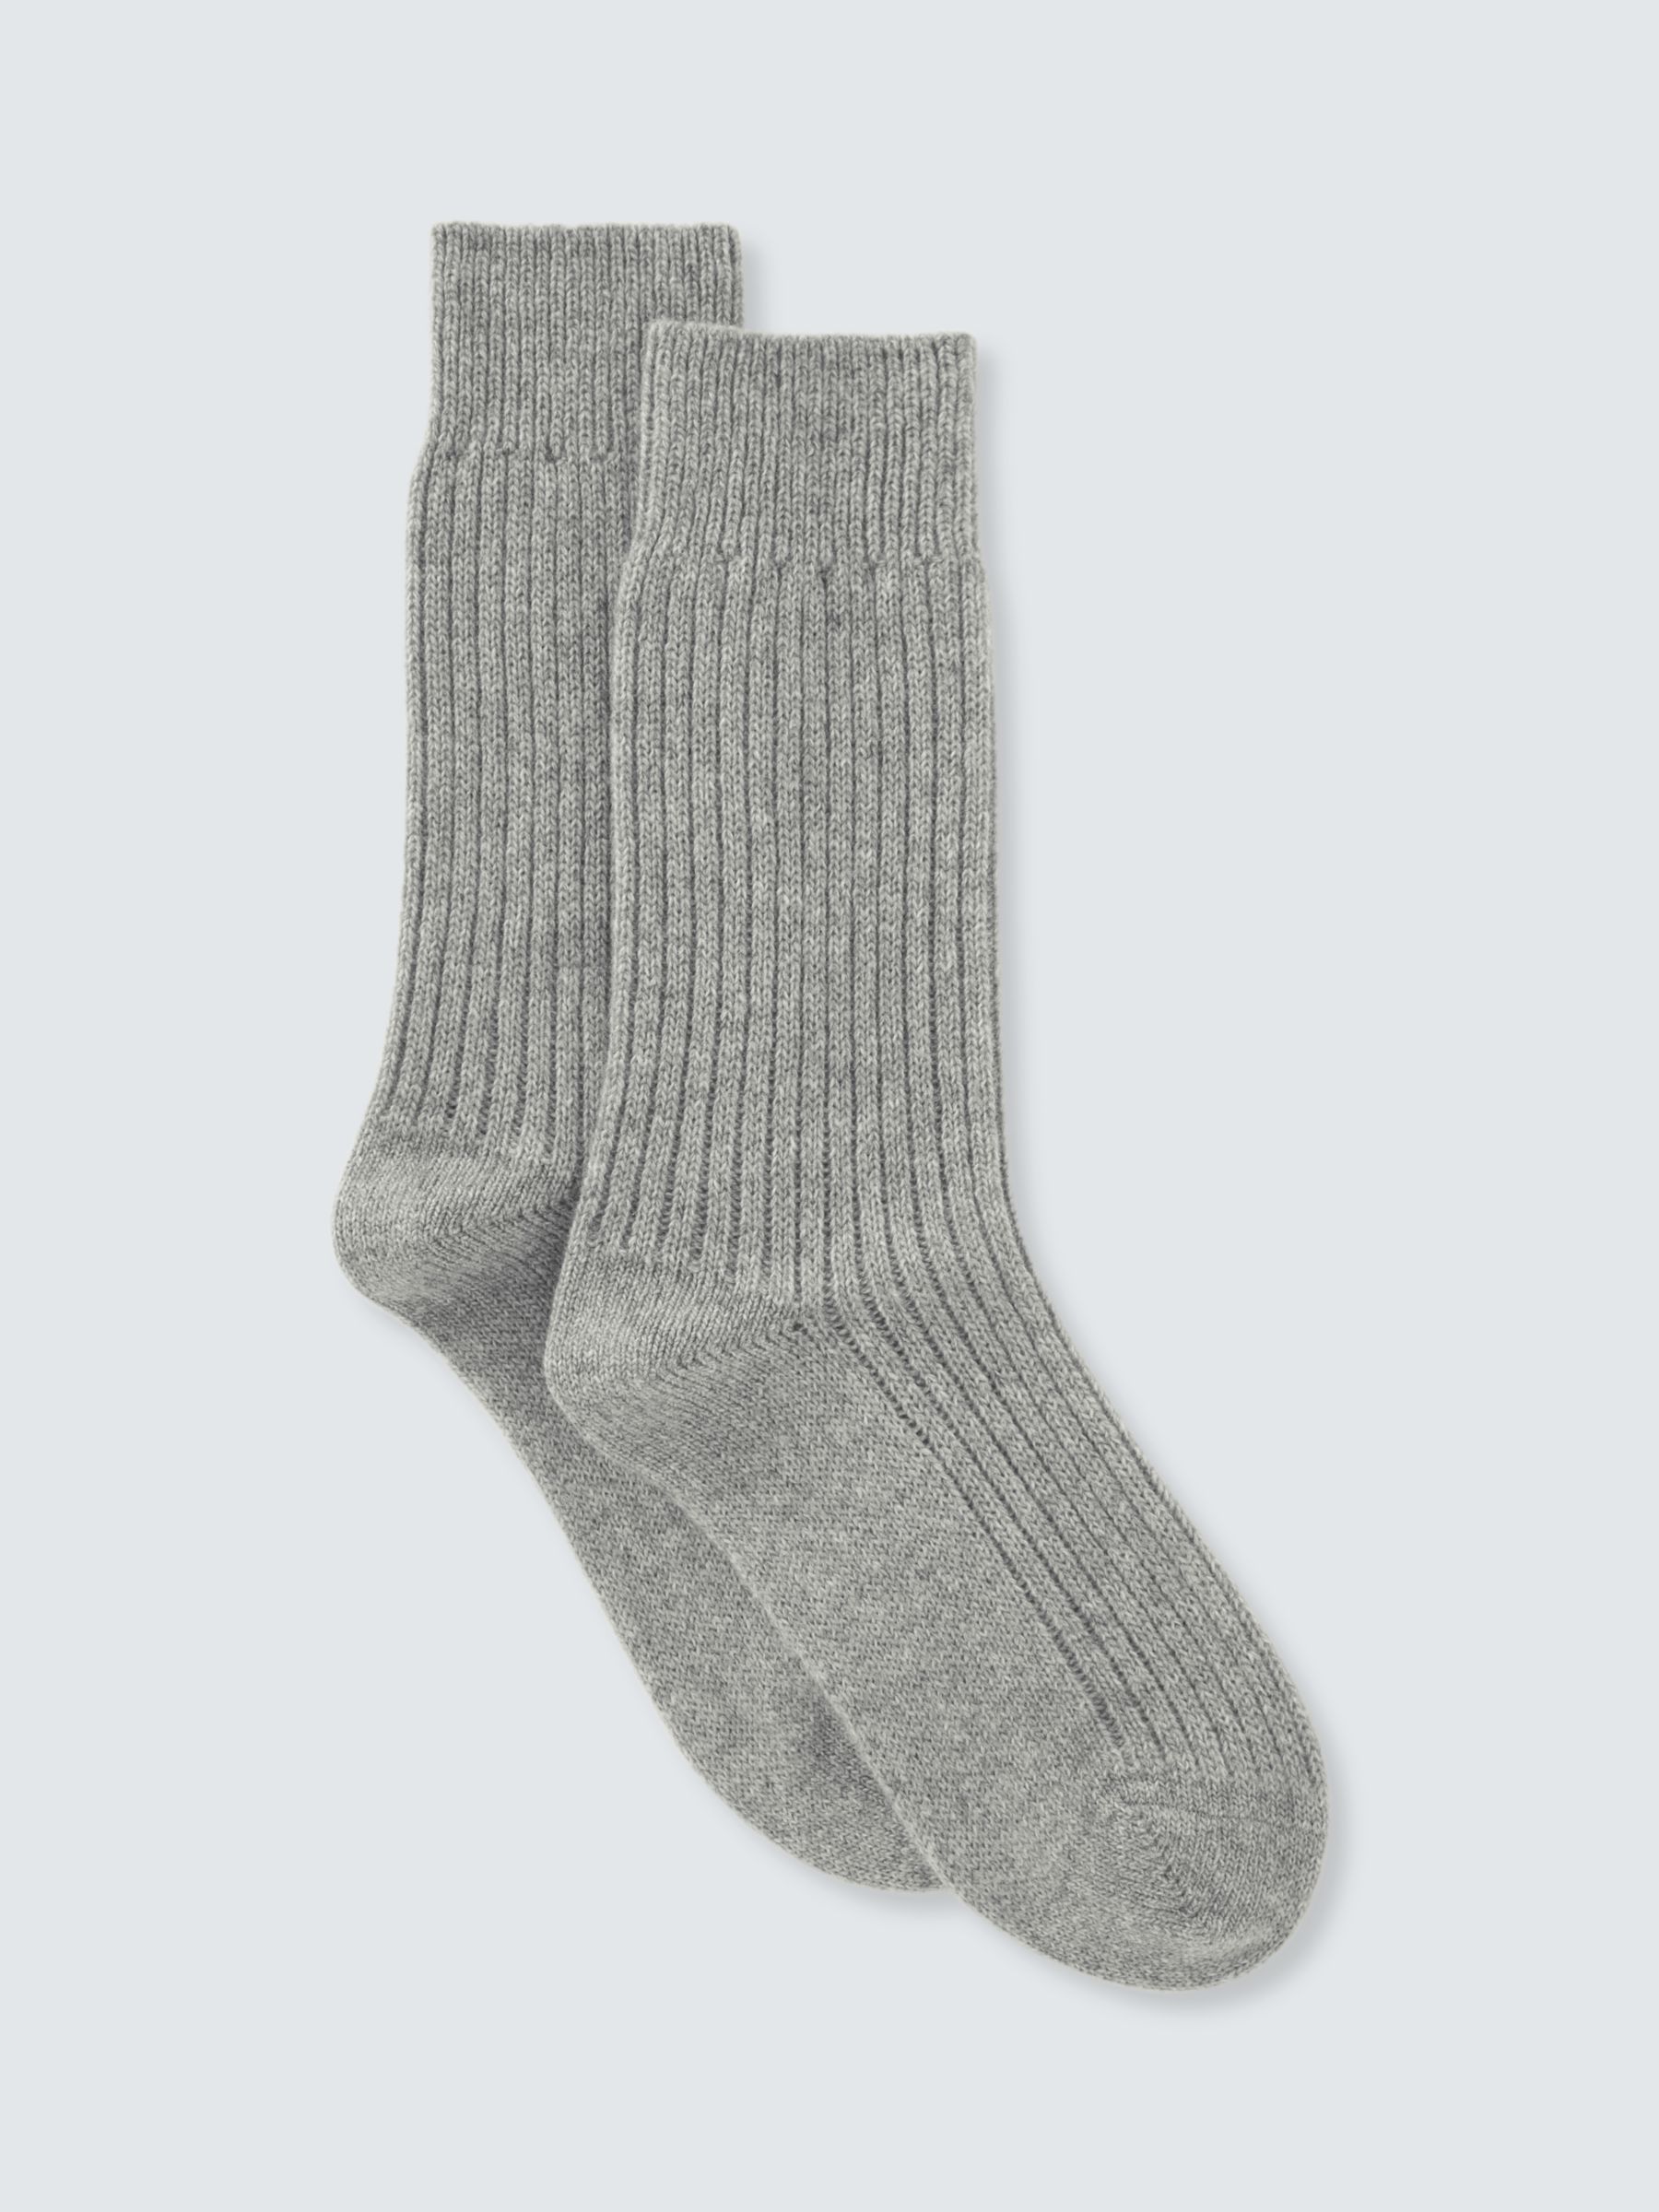 John Lewis Cashmere Rich Bed Socks, Grey at John Lewis & Partners